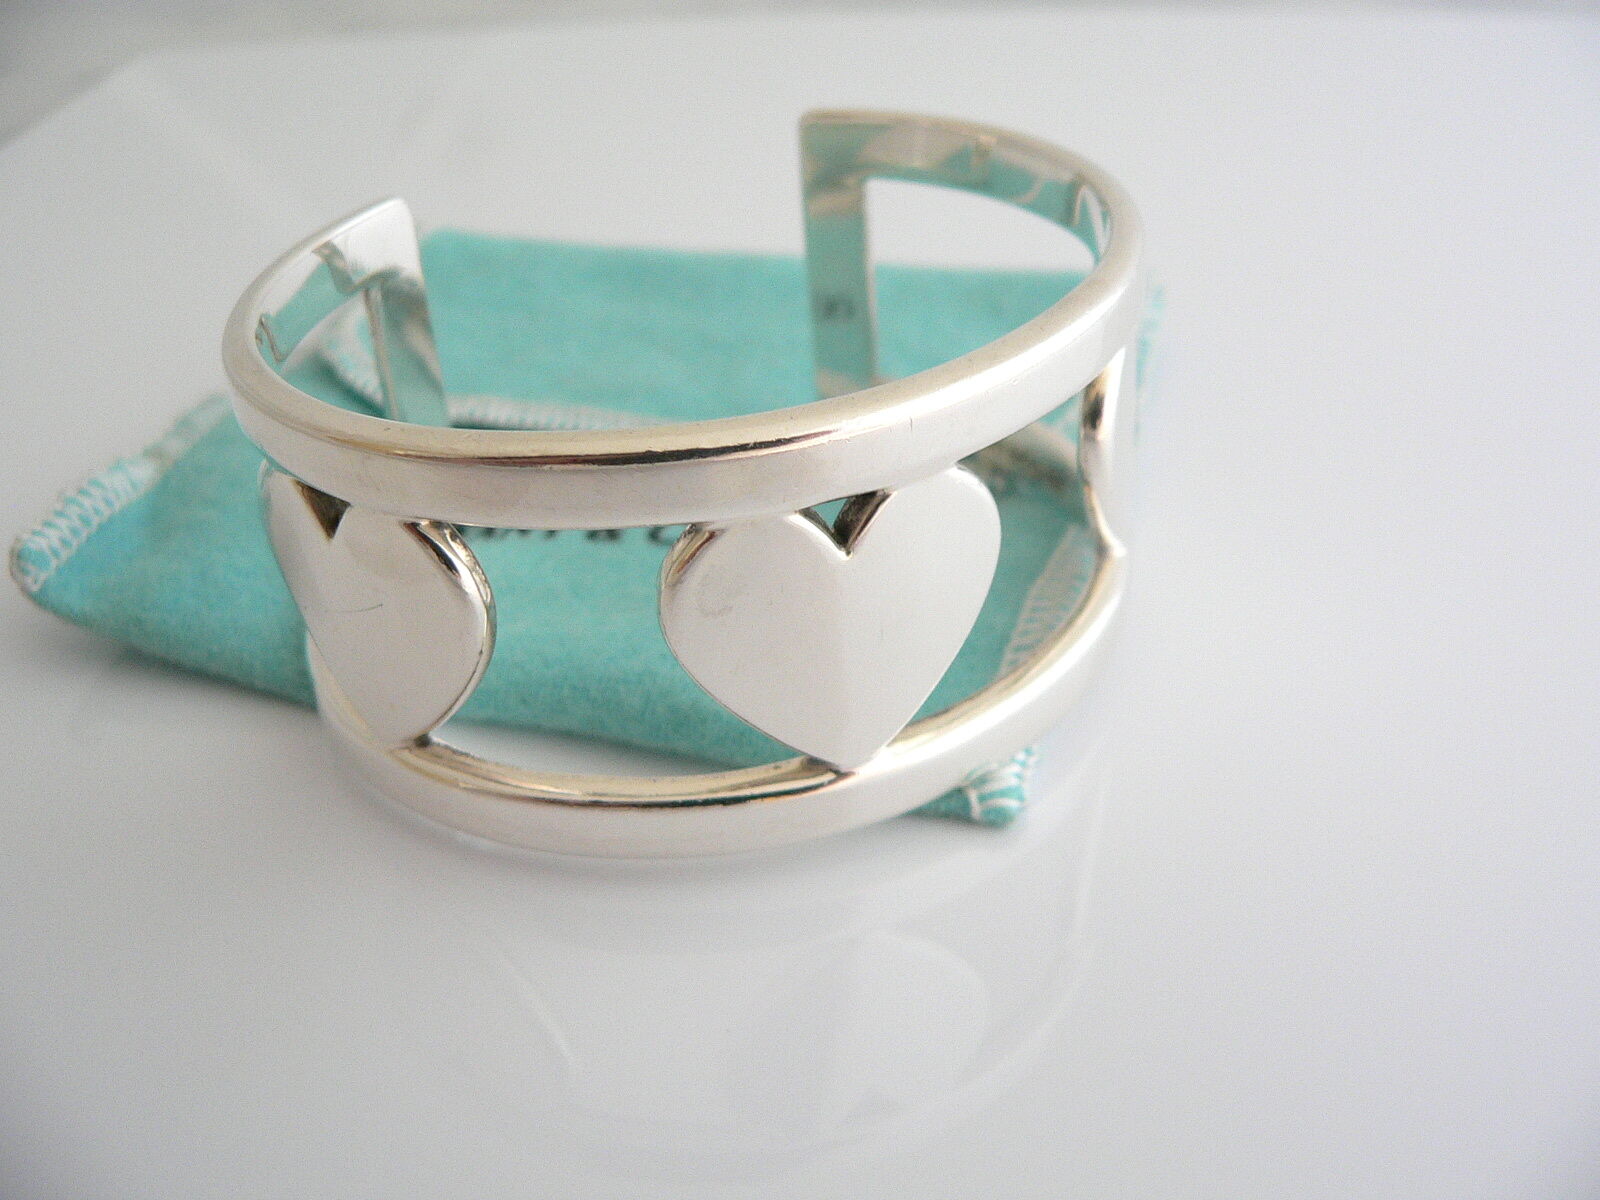 Tiffany & Co Silver Heart Bar Cuff Bangle Bracelet Rare Gift Pouch Love Art